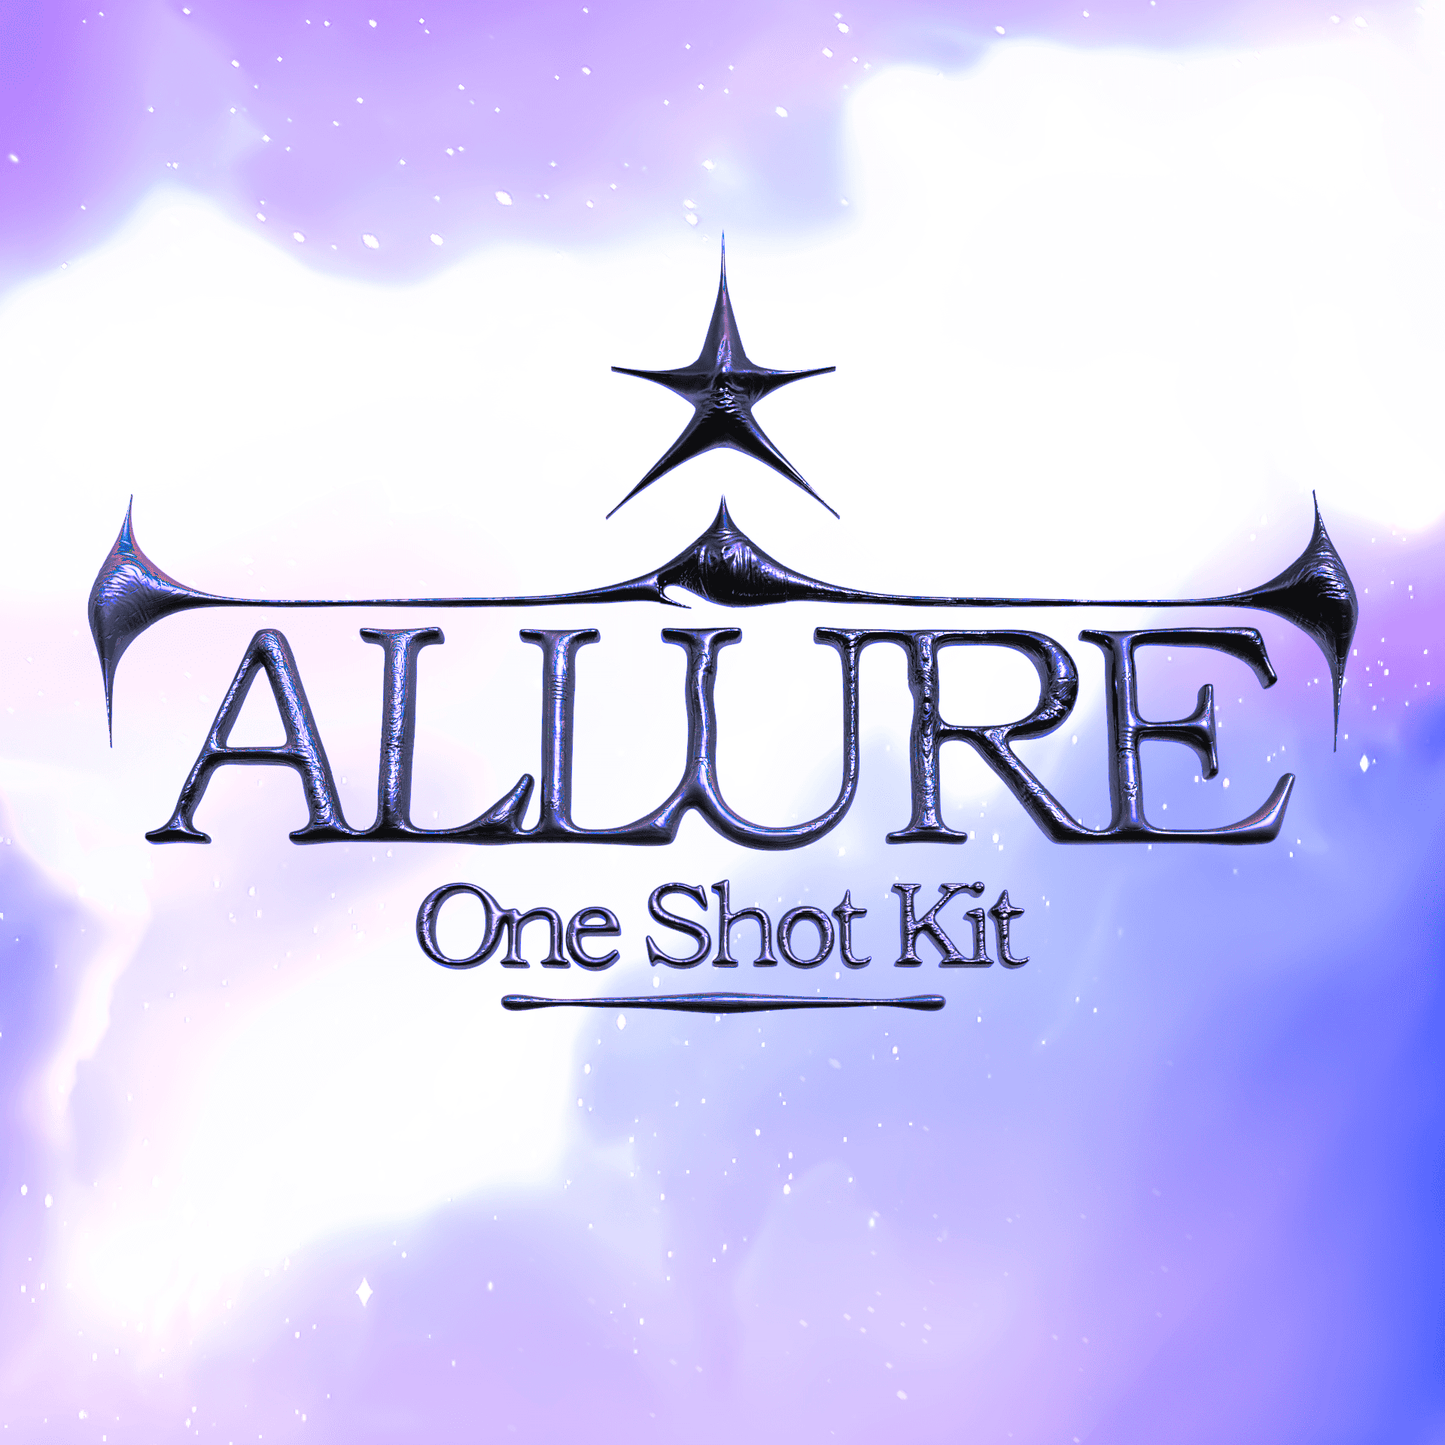 "ALLURE" ONE SHOT KIT